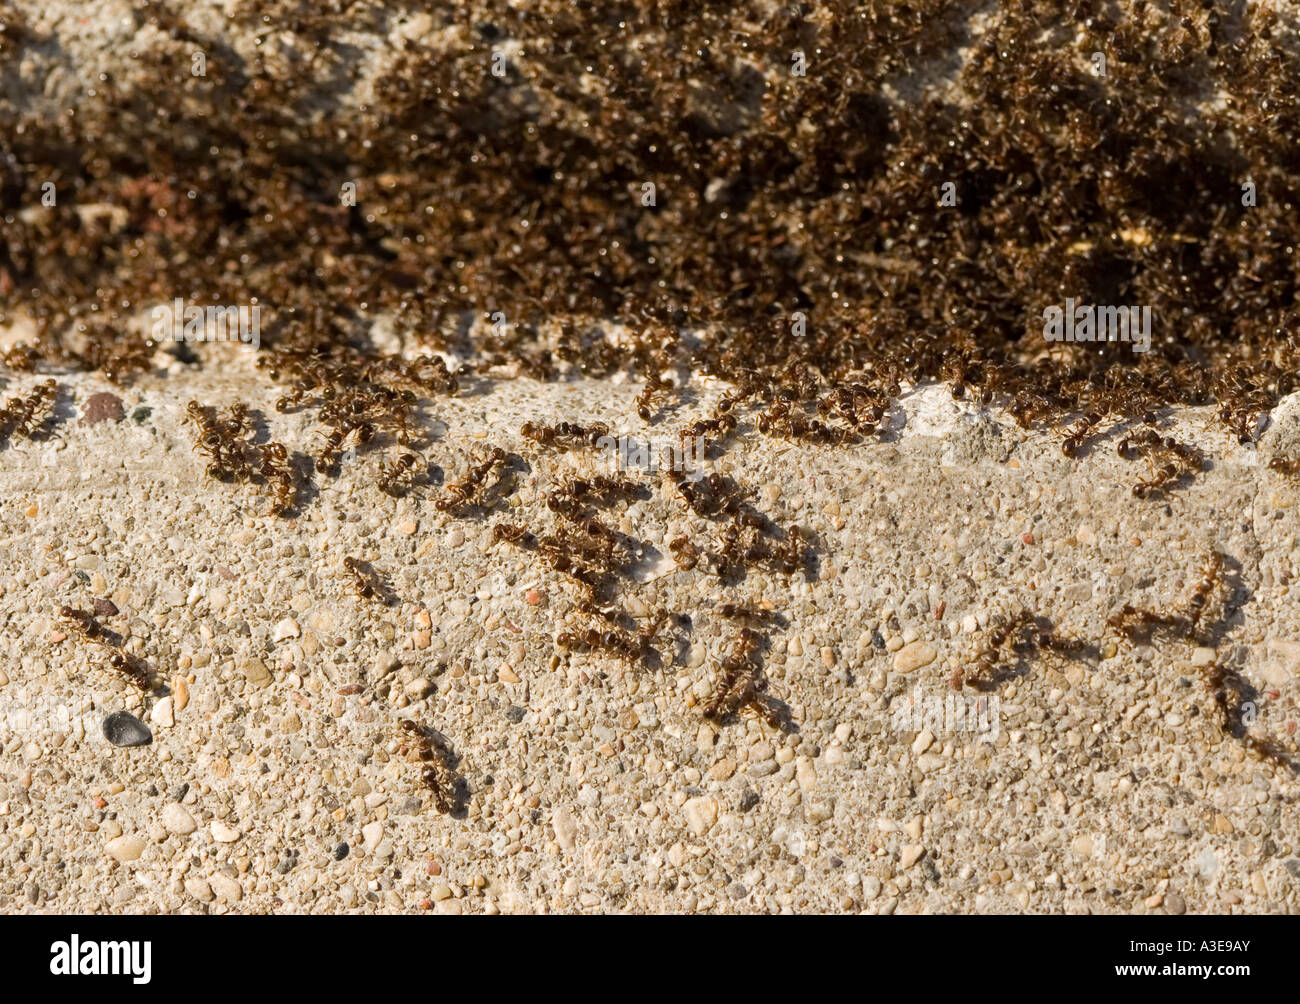 Ants on the sidewalk. Hymenoptera Formicidae Stock Photo